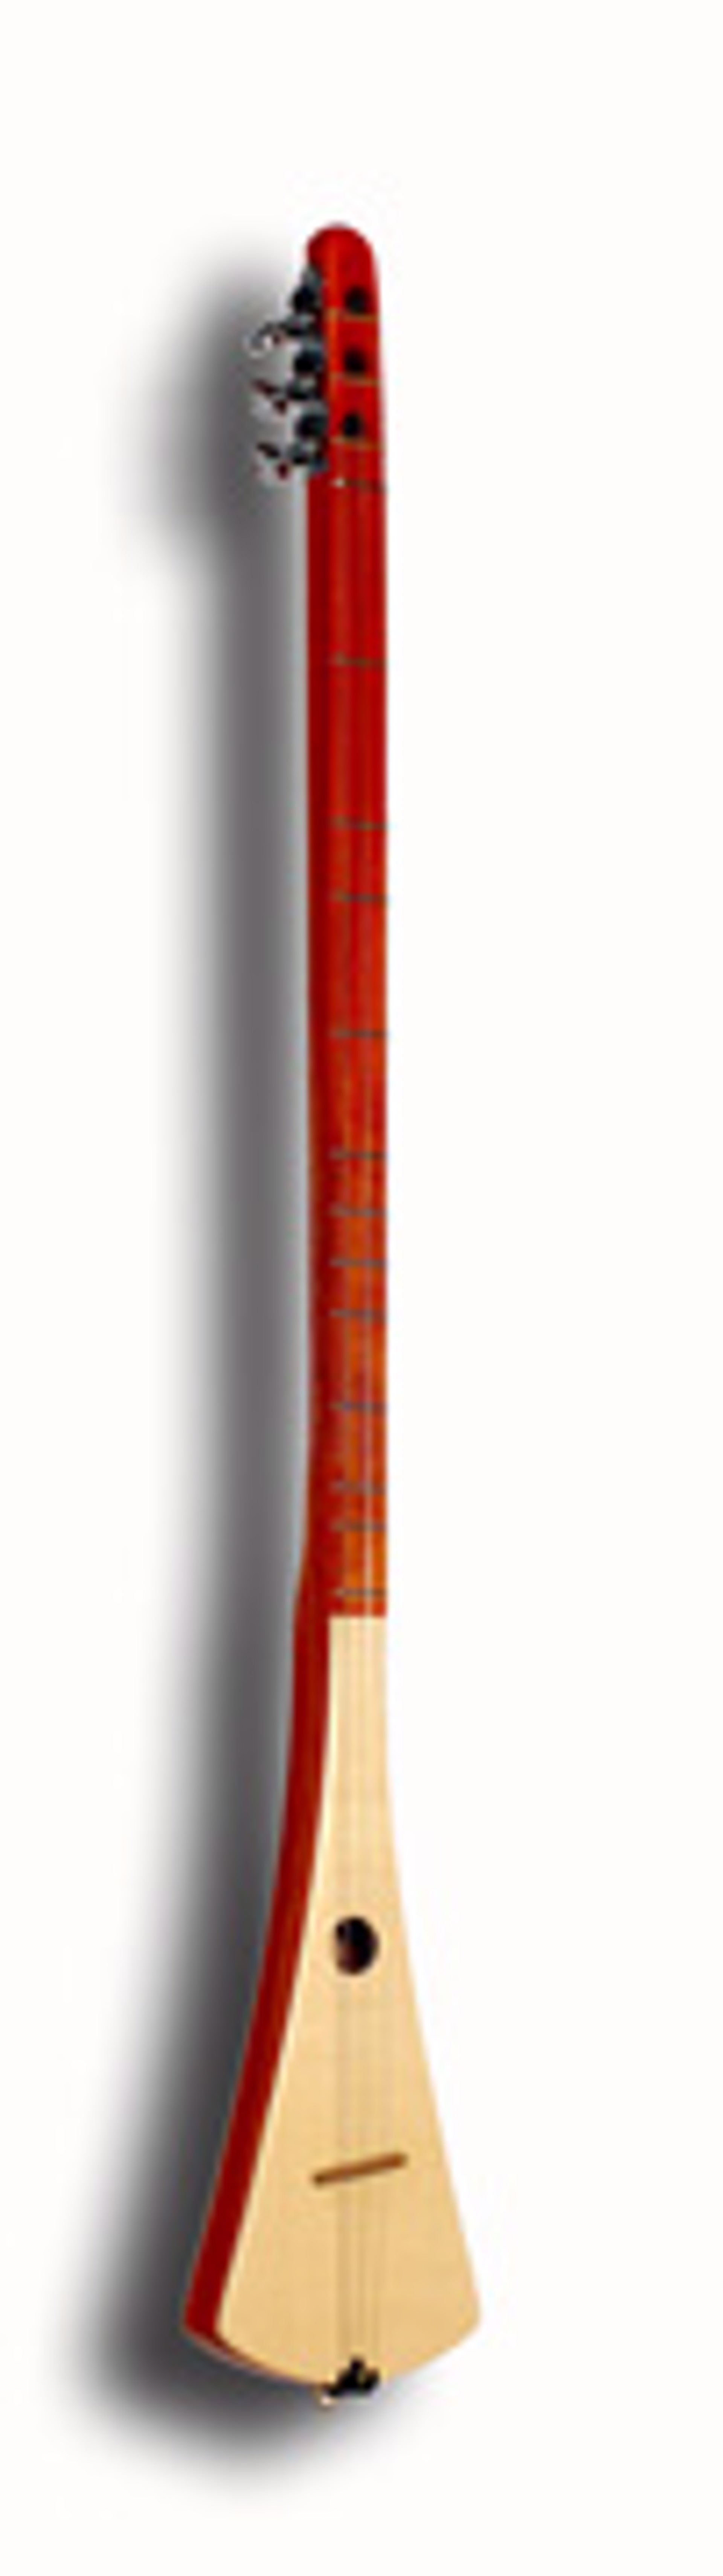 Regular Strumstick by McNally Instruments